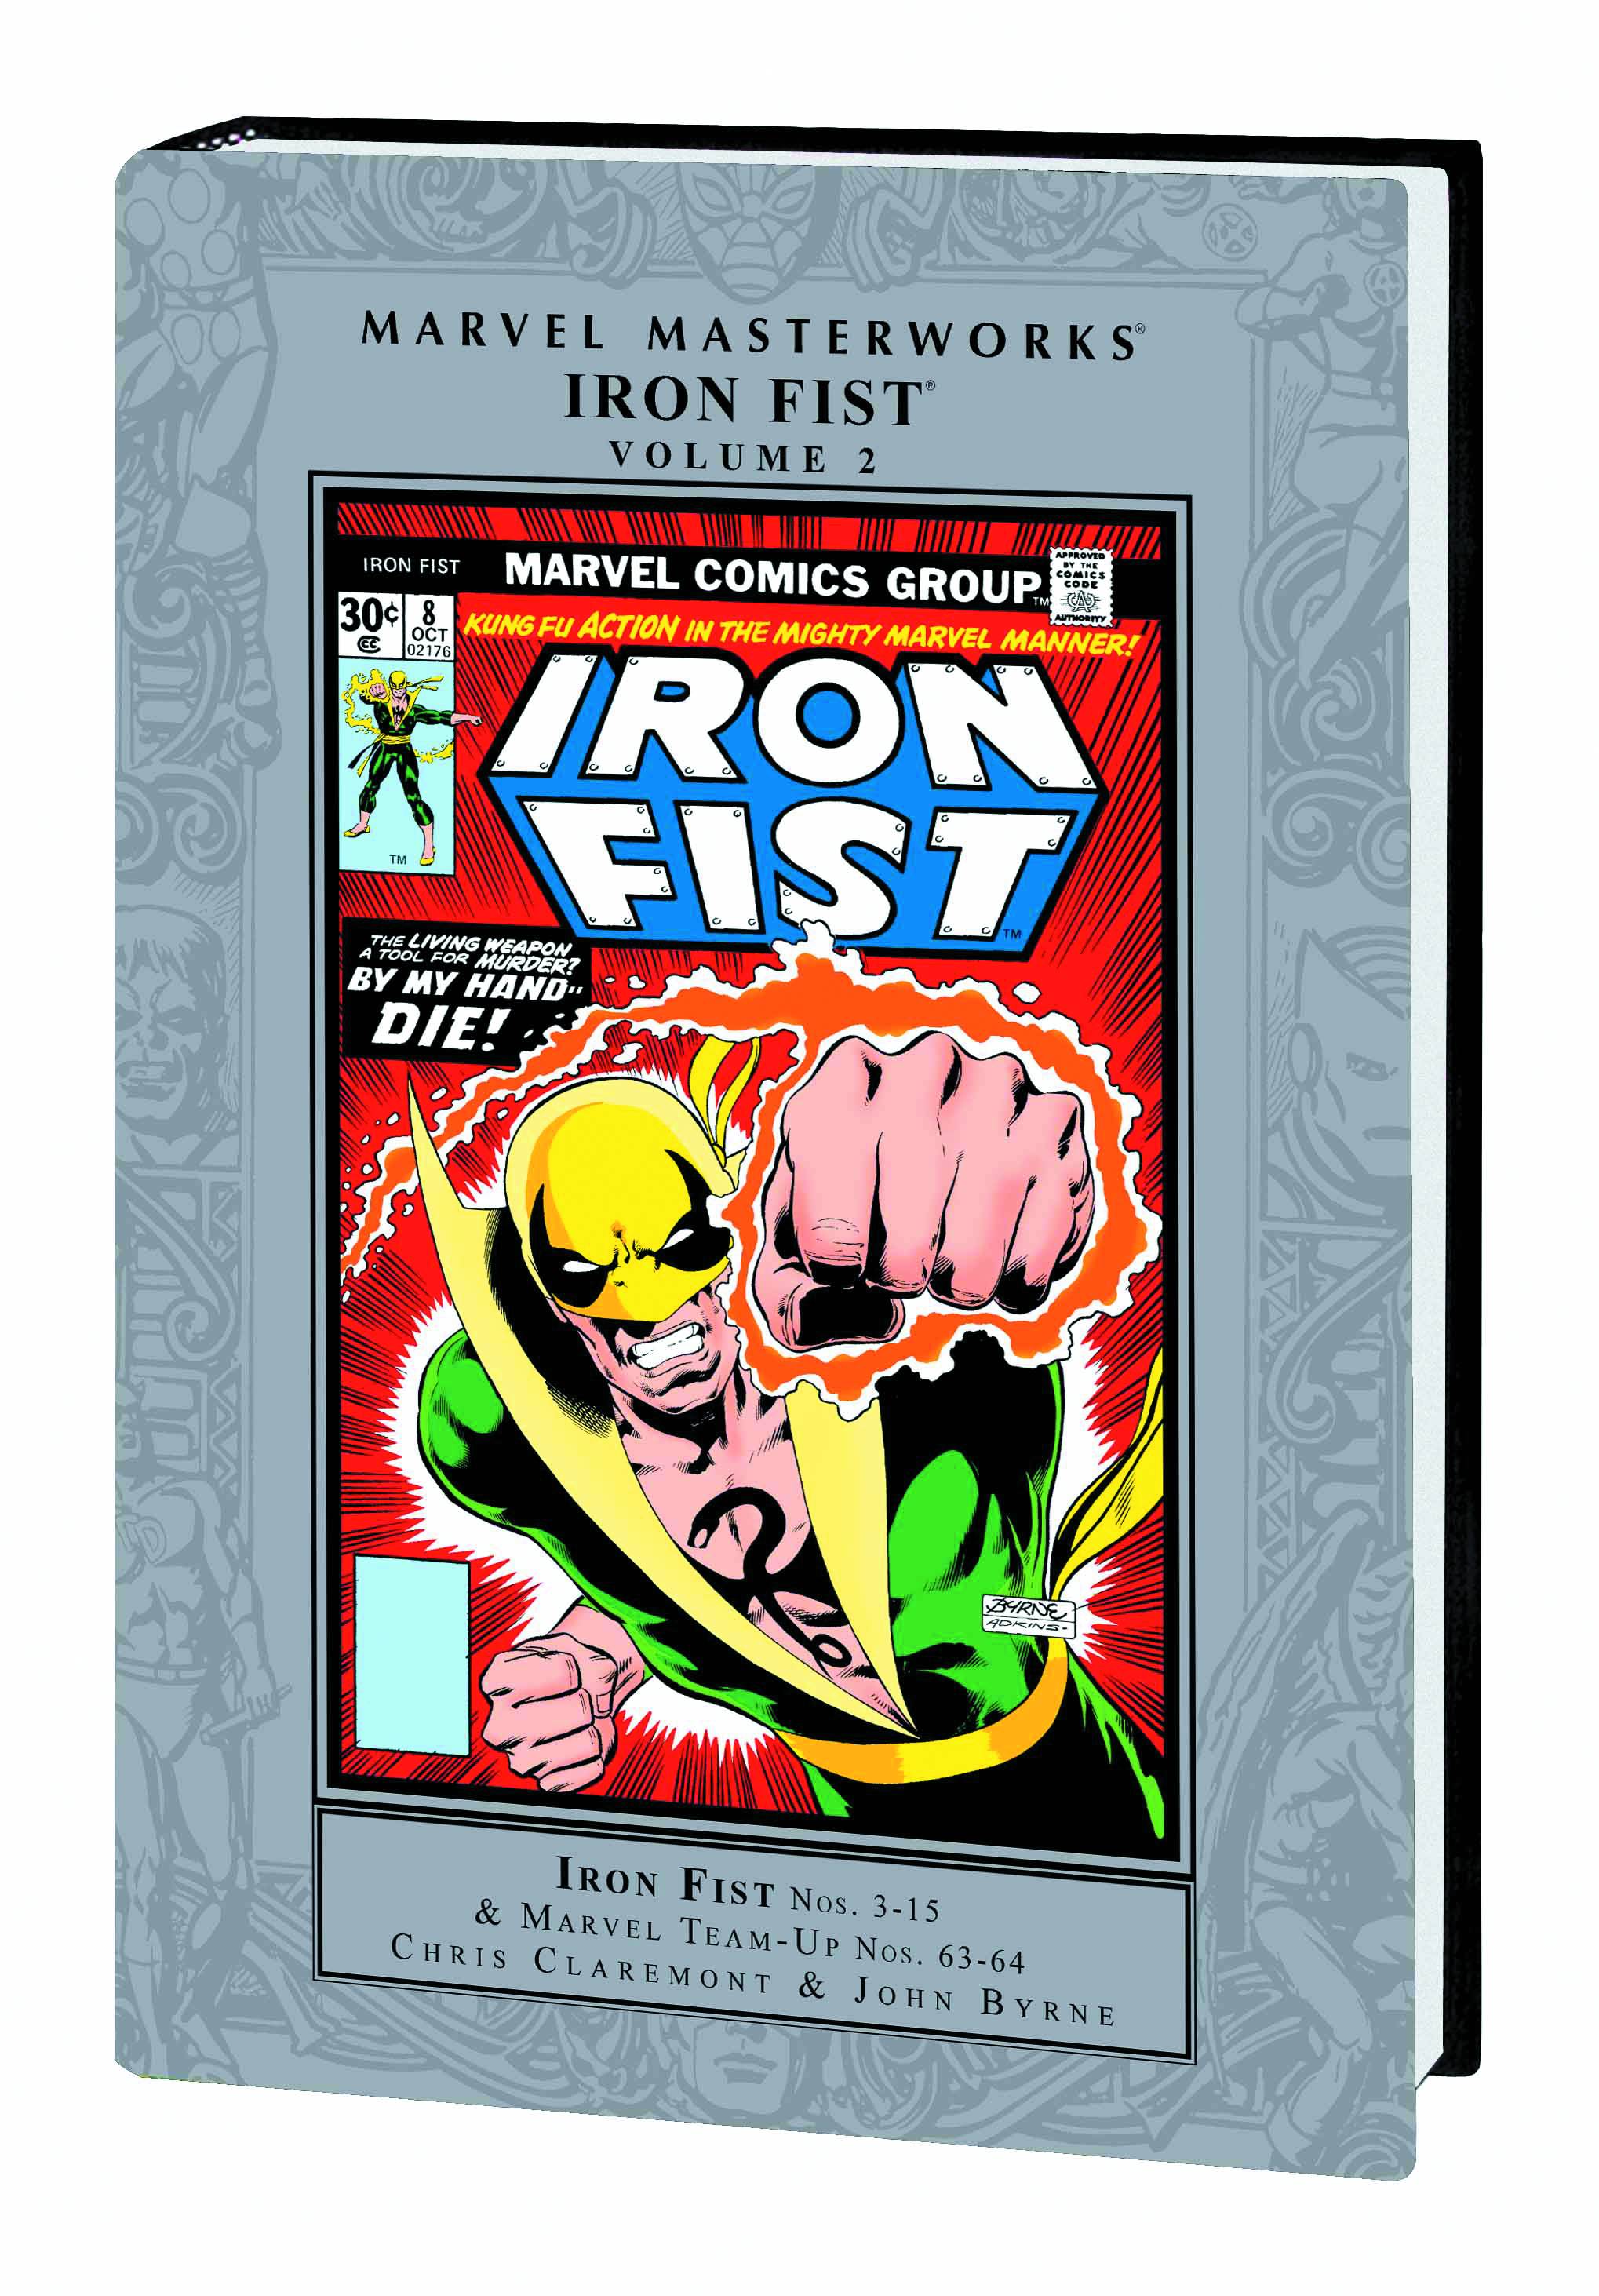 Marvel Masterworks Iron Fist Hardcover Volume 2